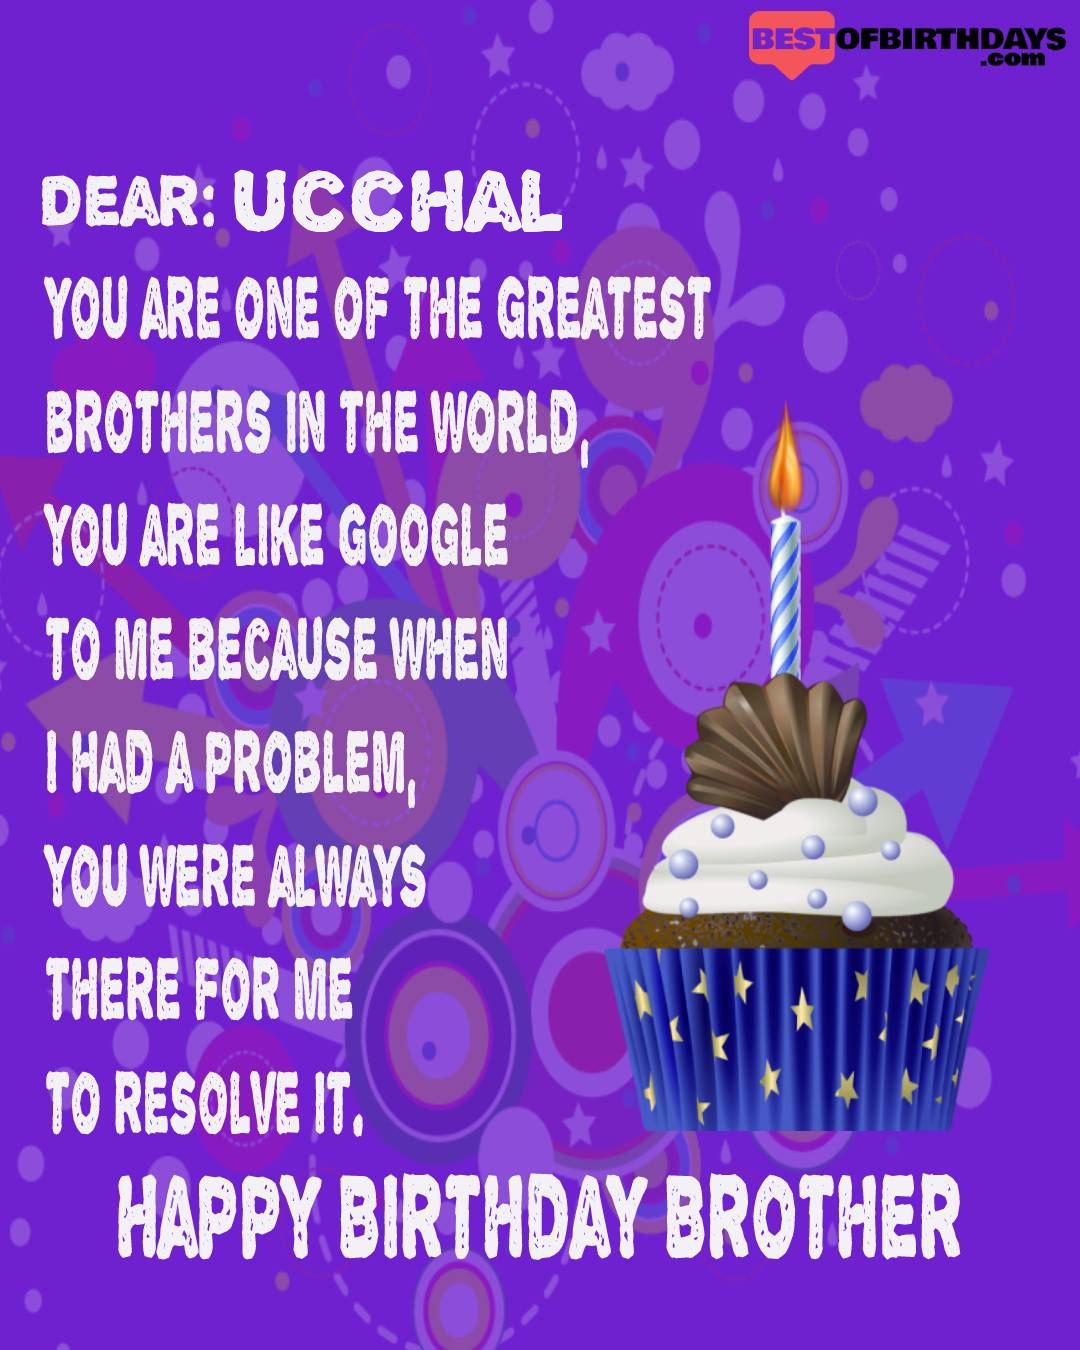 Happy birthday ucchal bhai brother bro